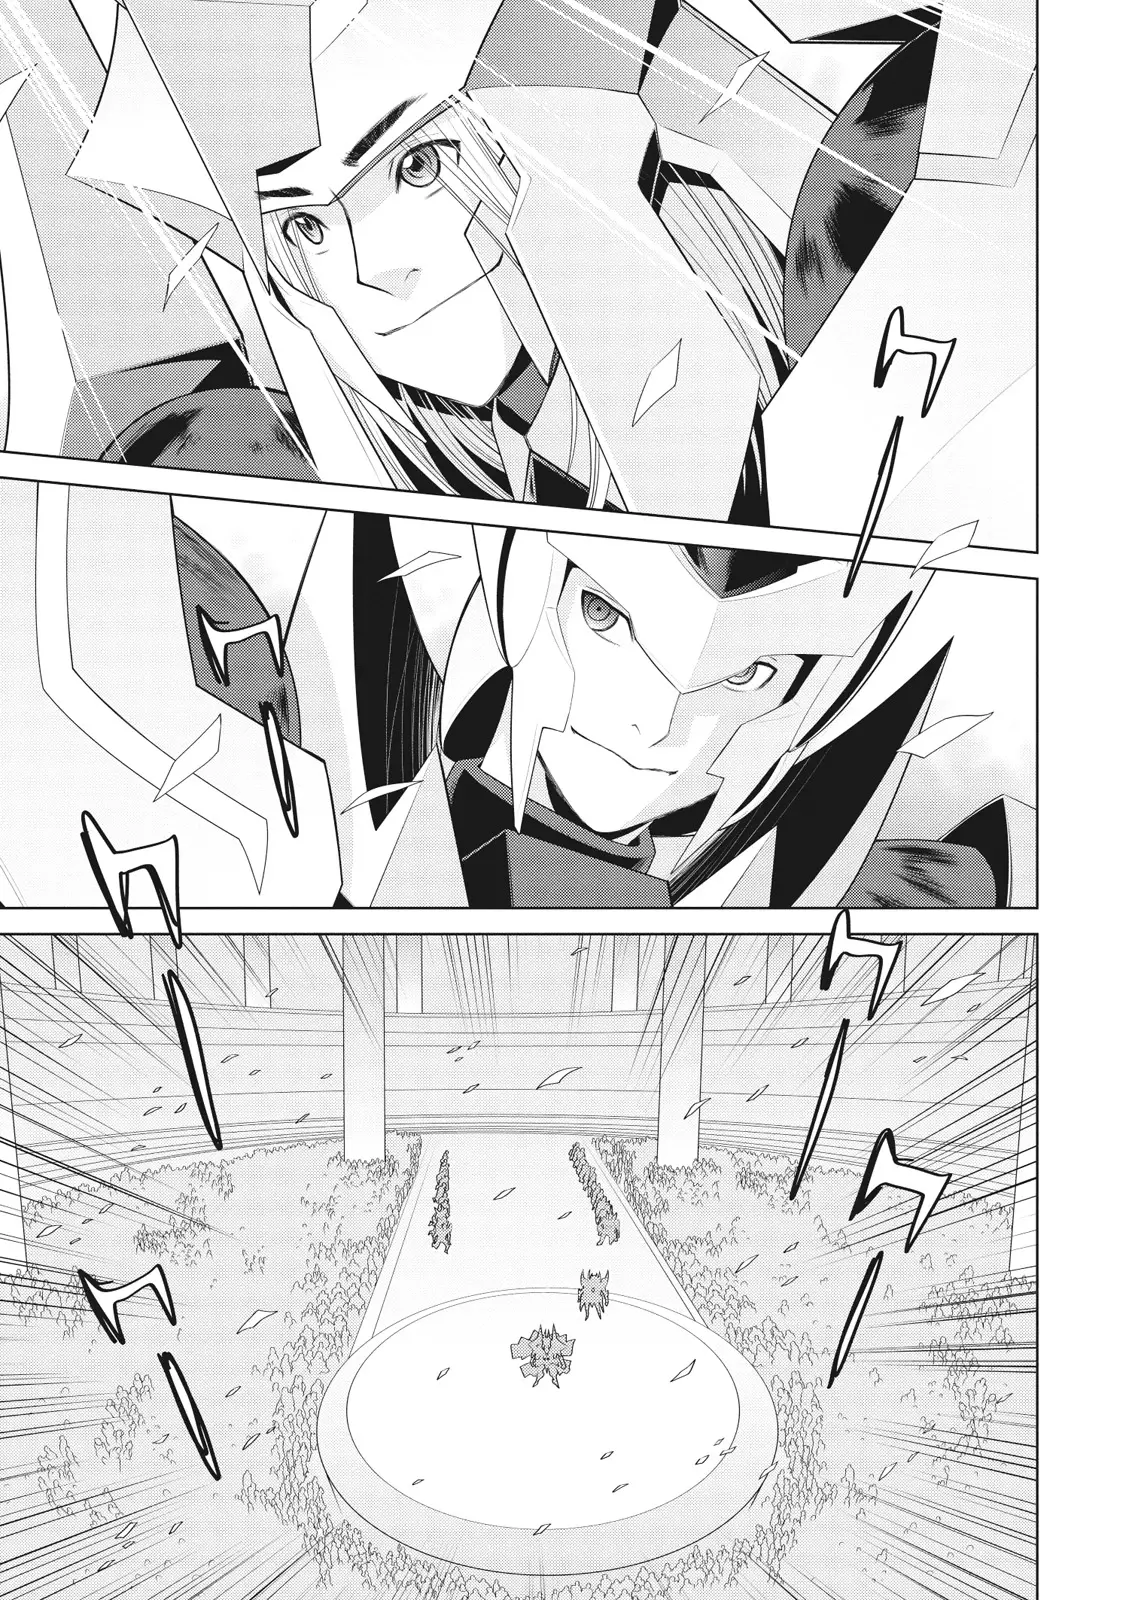 Cardfight!! Vanguard Gaiden: Shining Swordsman - 12 page 11-4516bef9